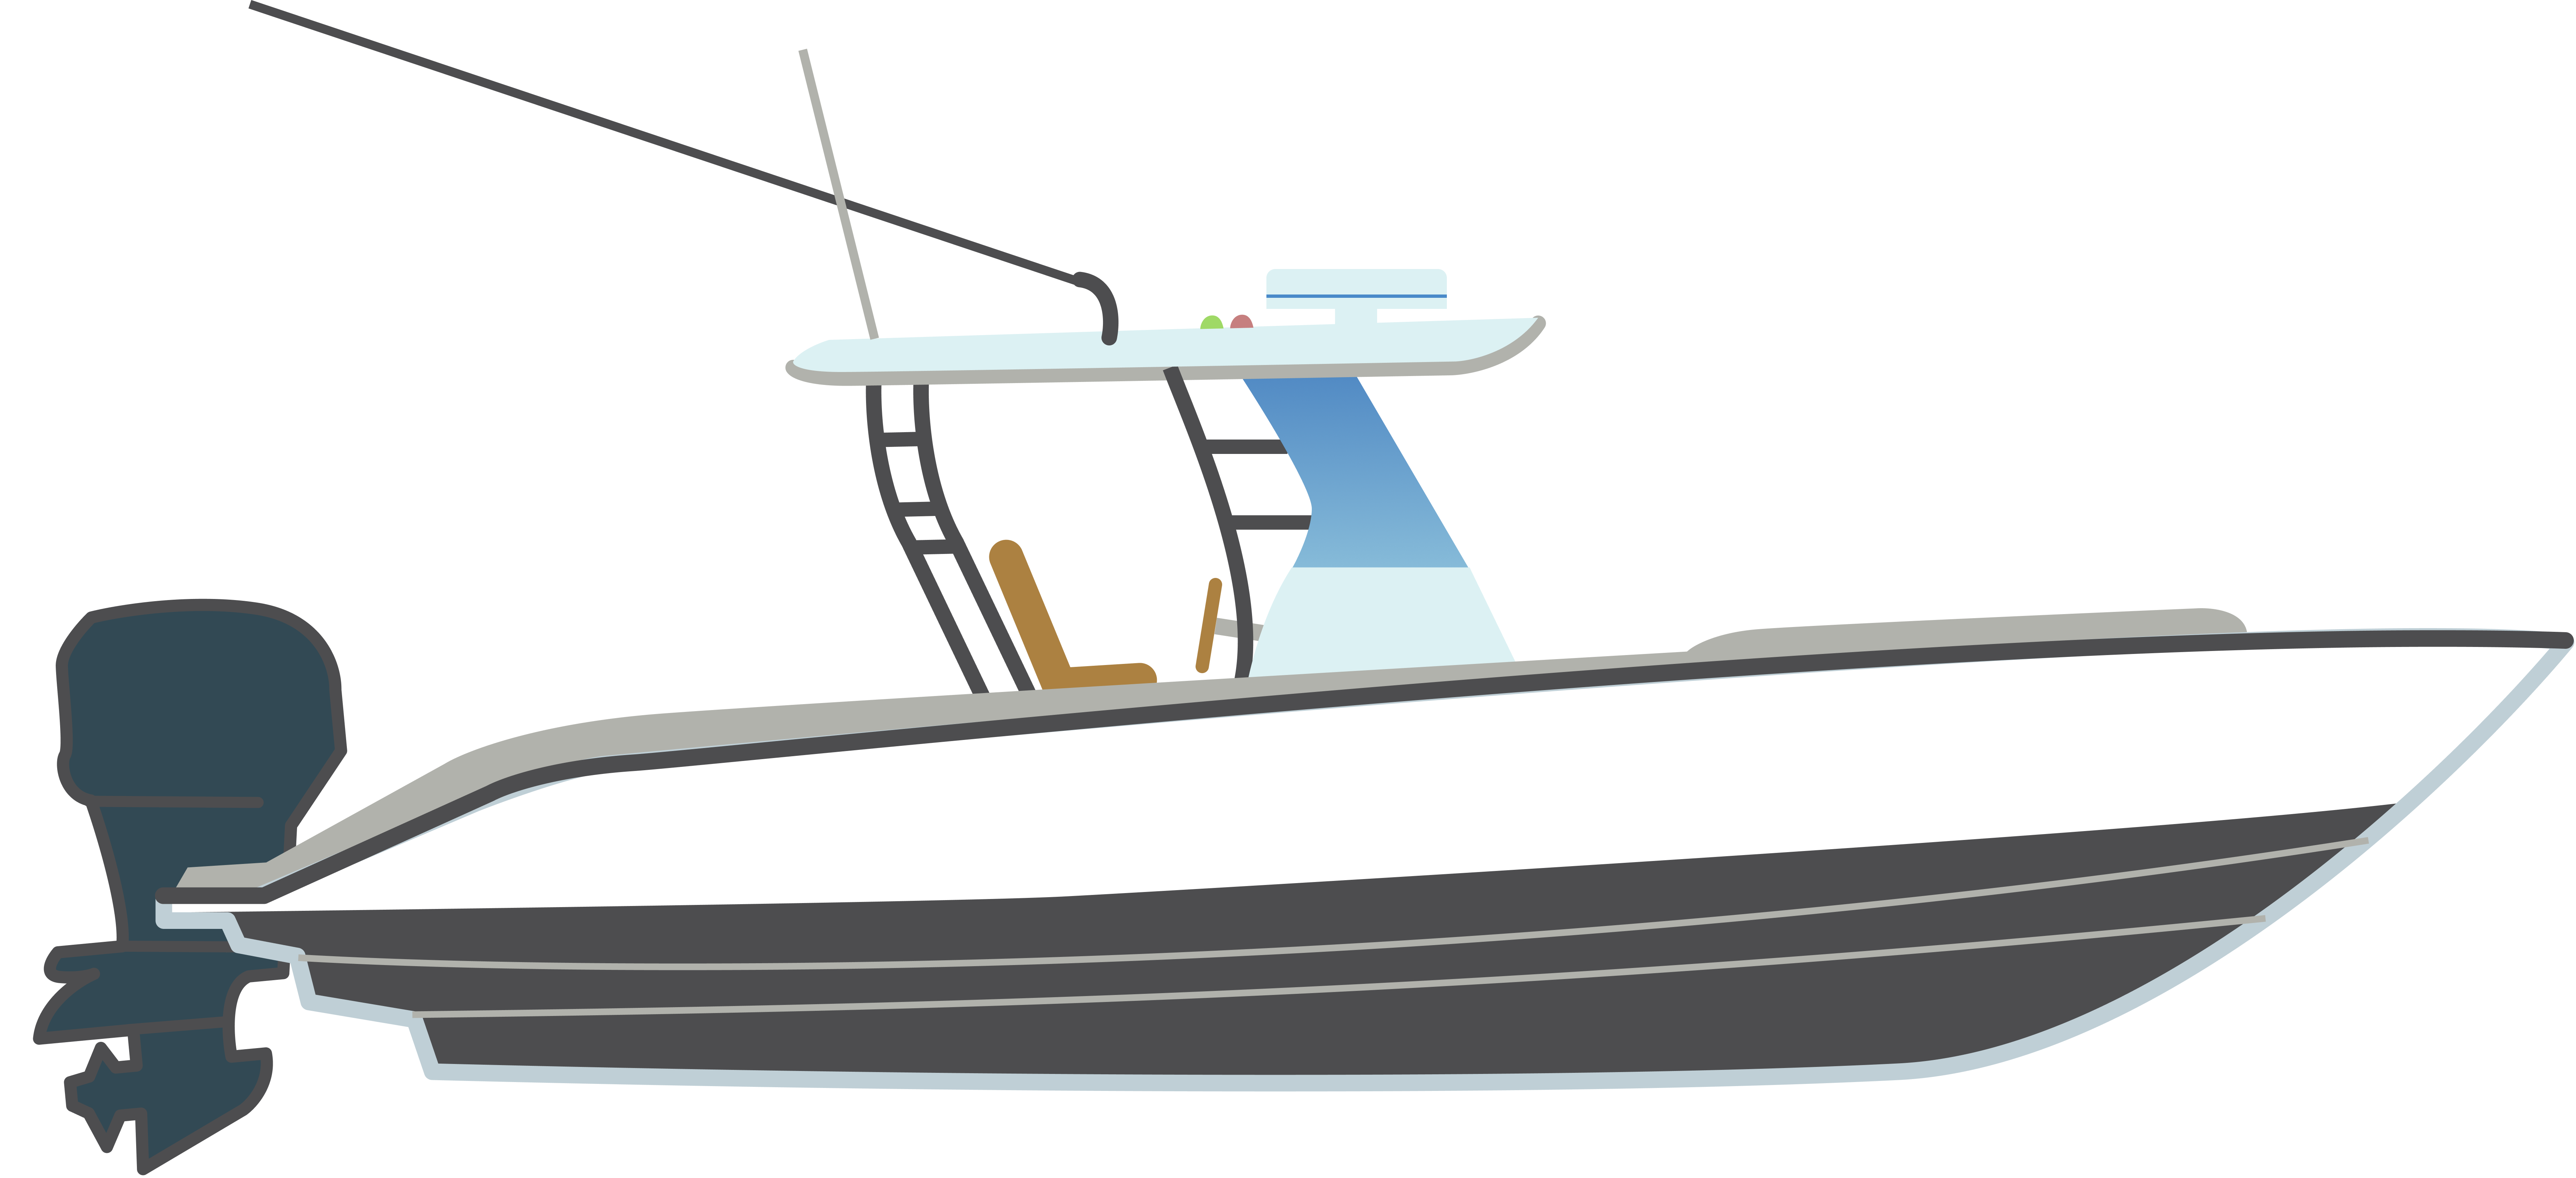 Inshore fishing vessel profile